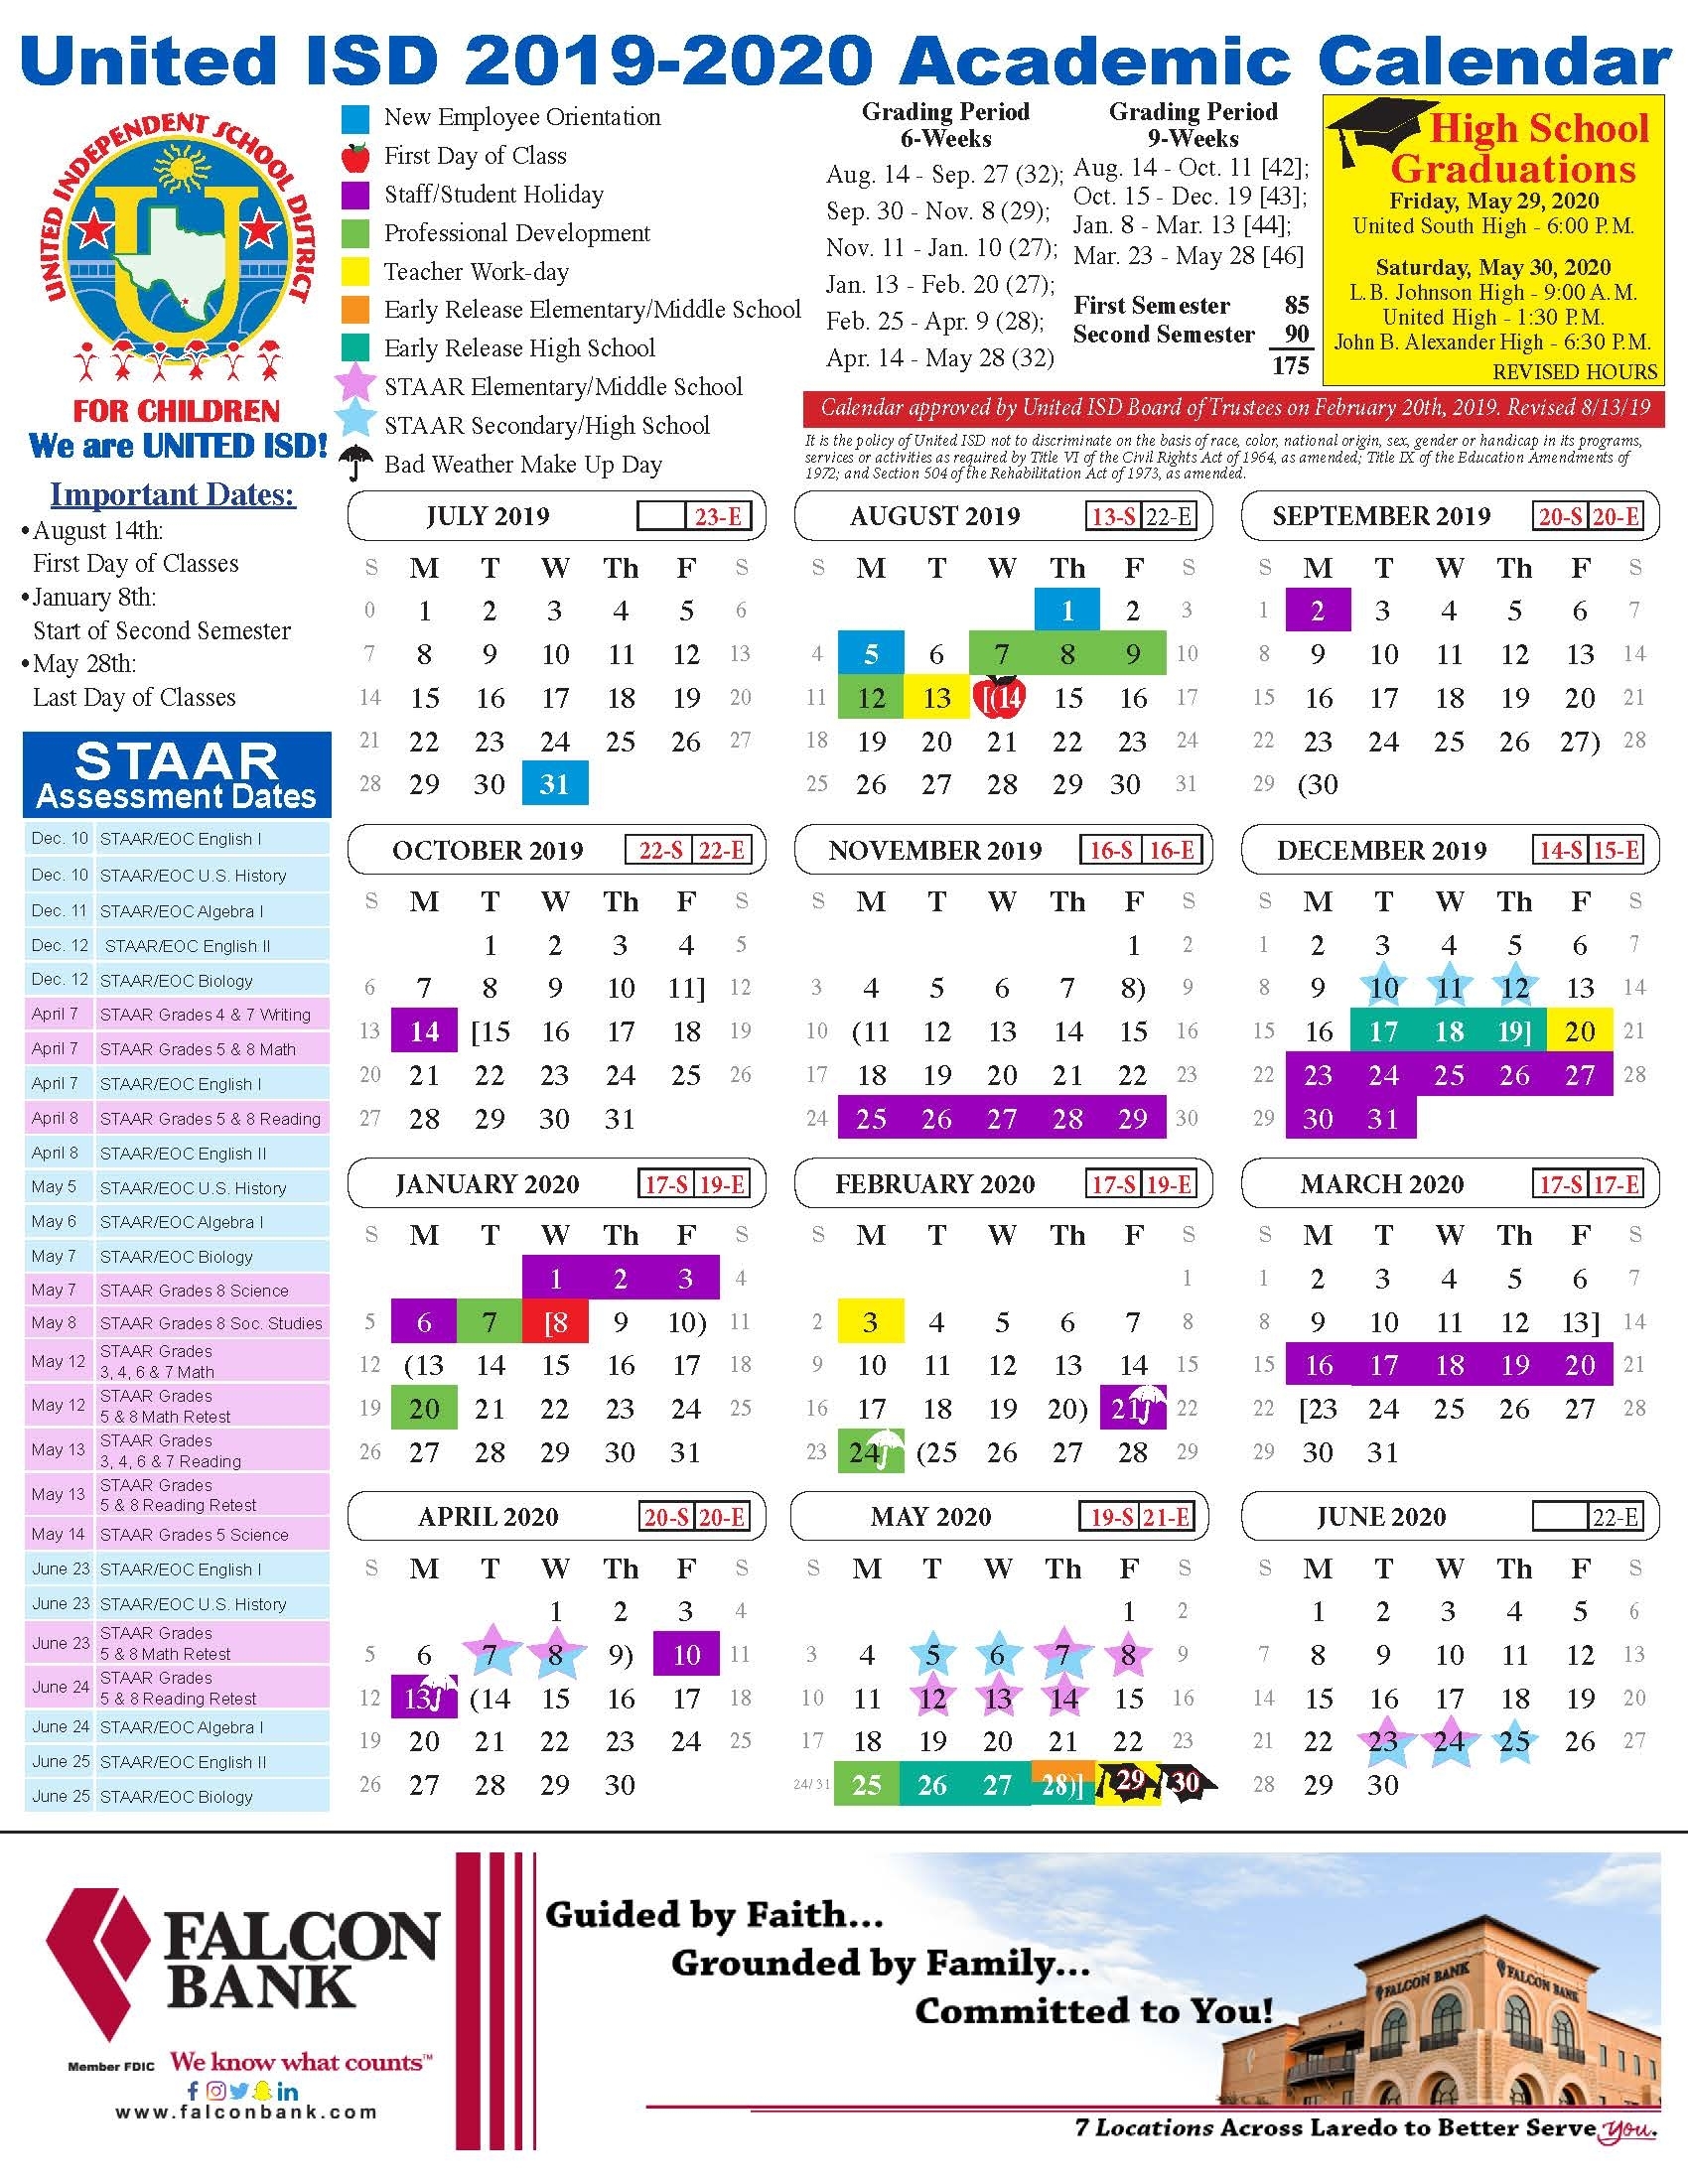 United Isd - Academic Calendar